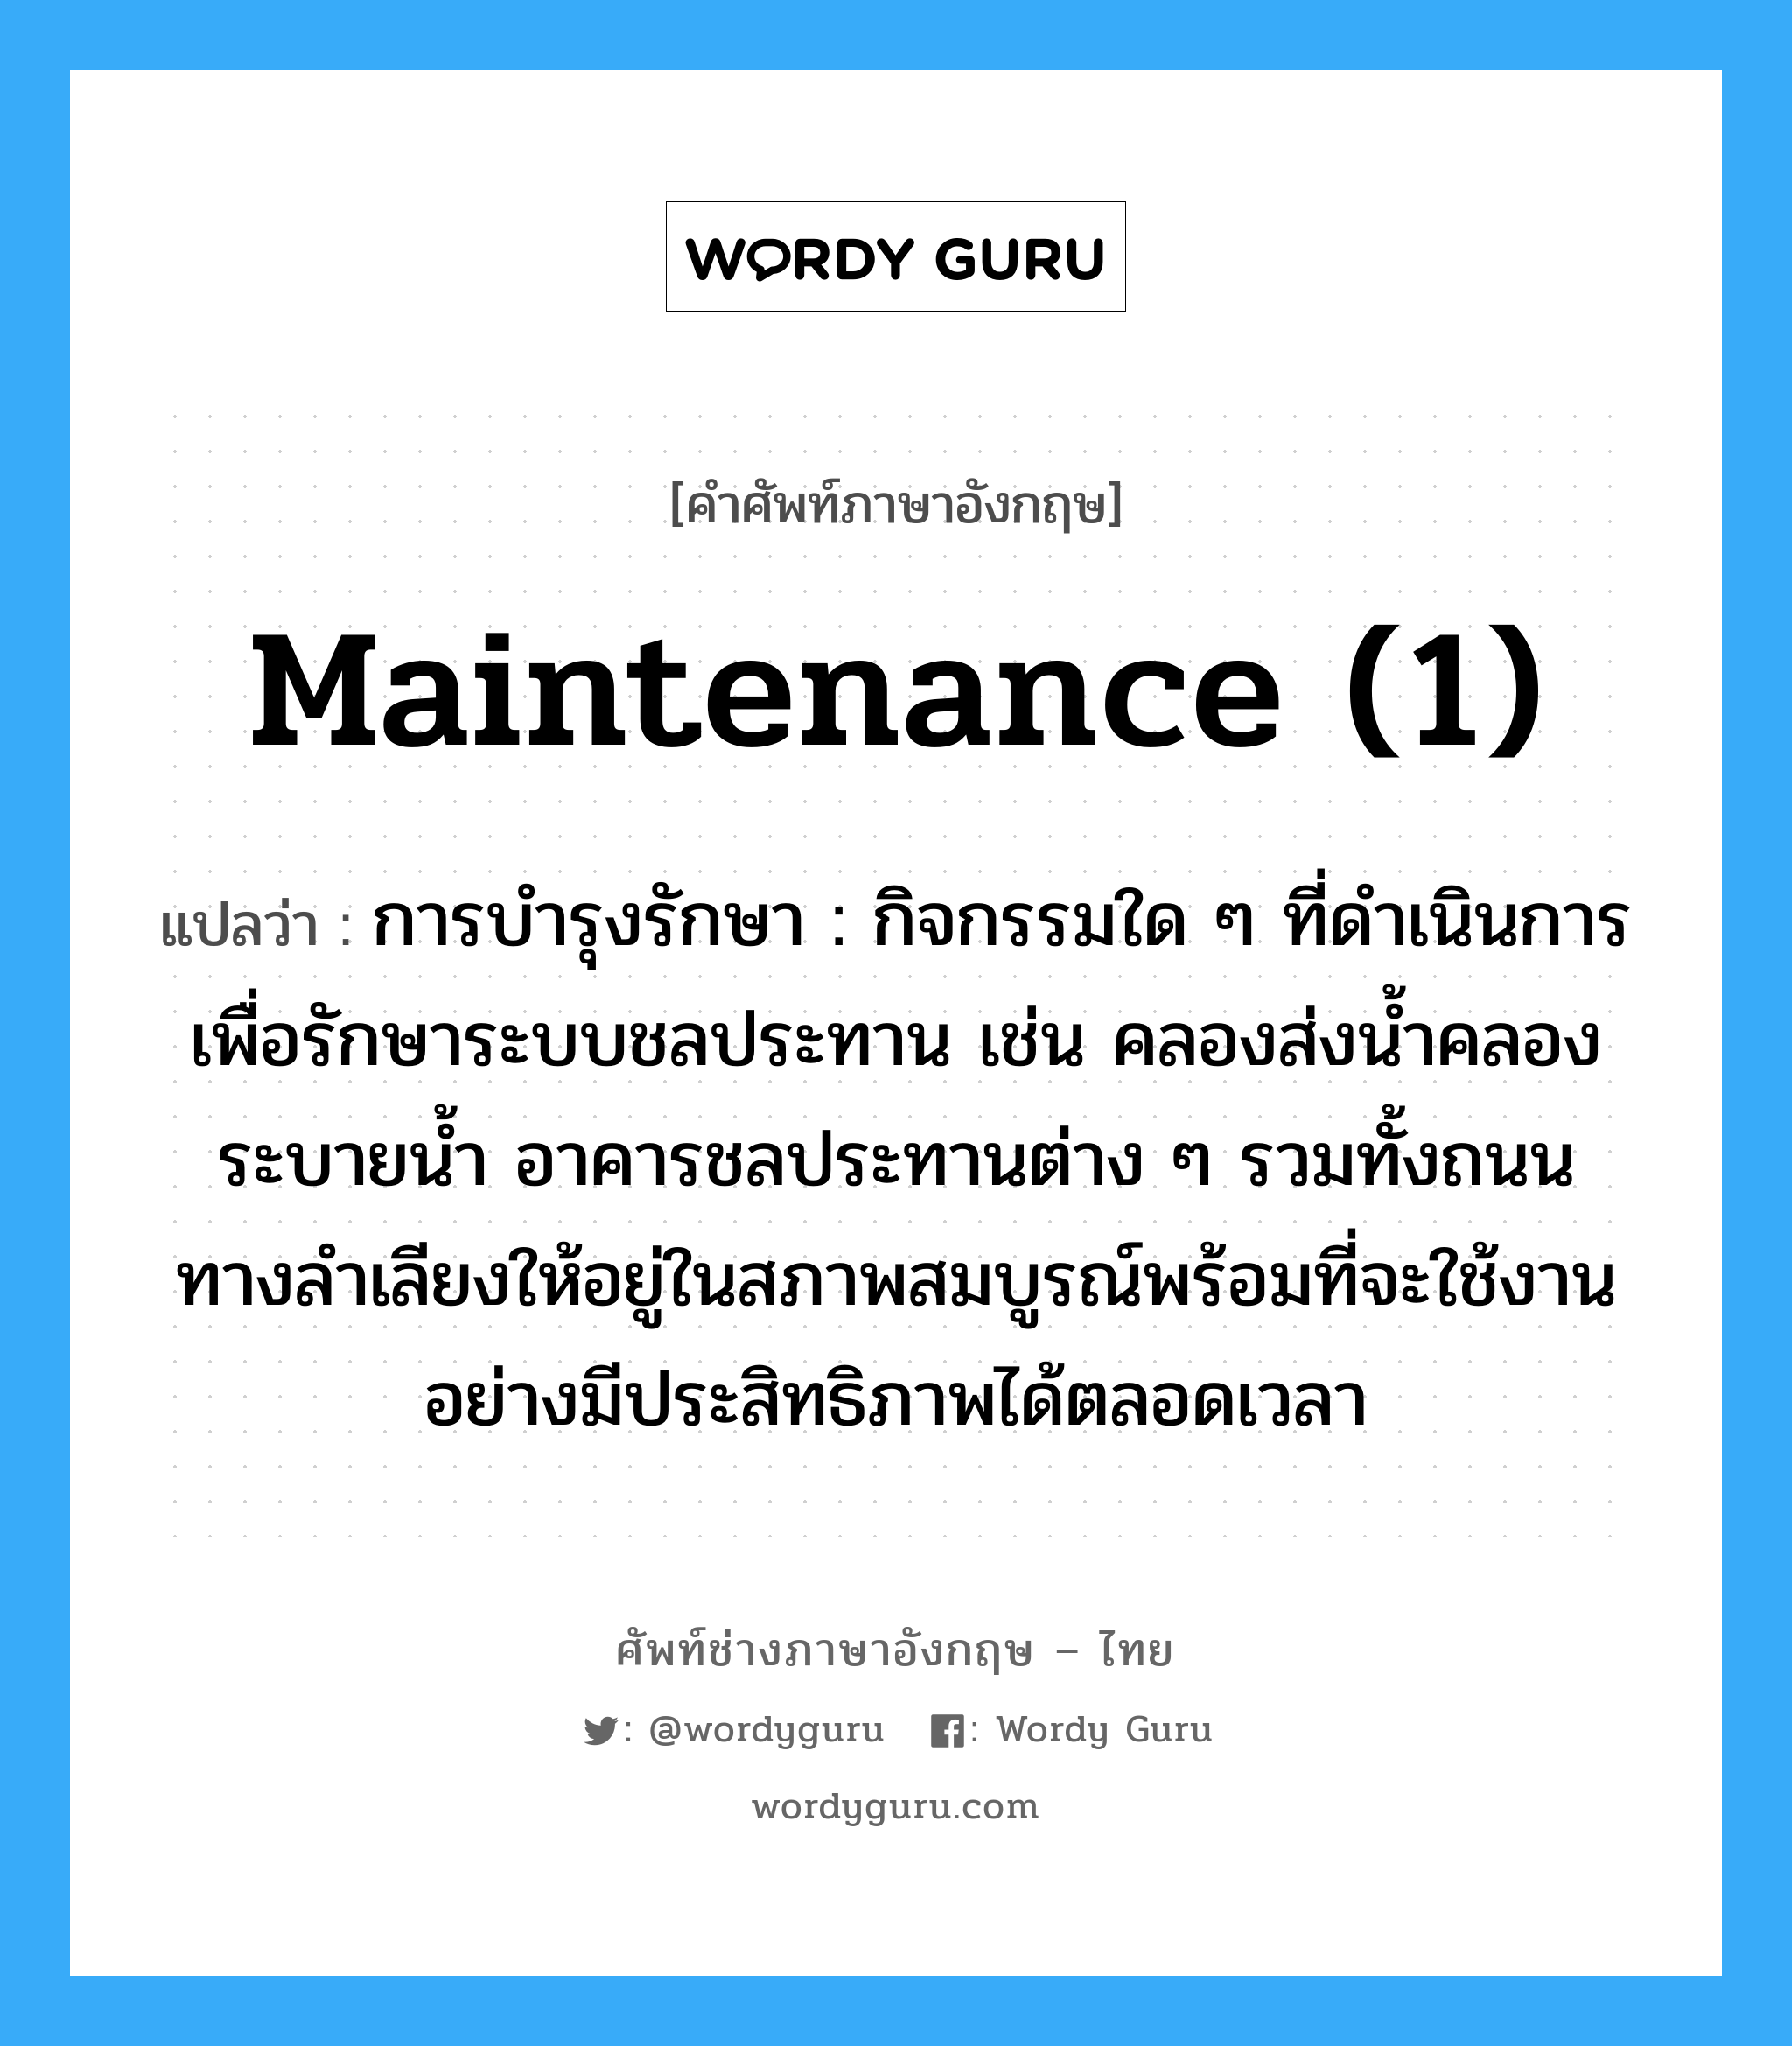 maintenance (1) แปลว่า?, คำศัพท์ช่างภาษาอังกฤษ - ไทย maintenance (1) คำศัพท์ภาษาอังกฤษ maintenance (1) แปลว่า การบำรุงรักษา : กิจกรรมใด ๆ ที่ดำเนินการเพื่อรักษาระบบชลประทาน เช่น คลองส่งน้ำคลองระบายน้ำ อาคารชลประทานต่าง ๆ รวมทั้งถนน ทางลำเลียงให้อยู่ในสภาพสมบูรณ์พร้อมที่จะใช้งานอย่างมีประสิทธิภาพได้ตลอดเวลา